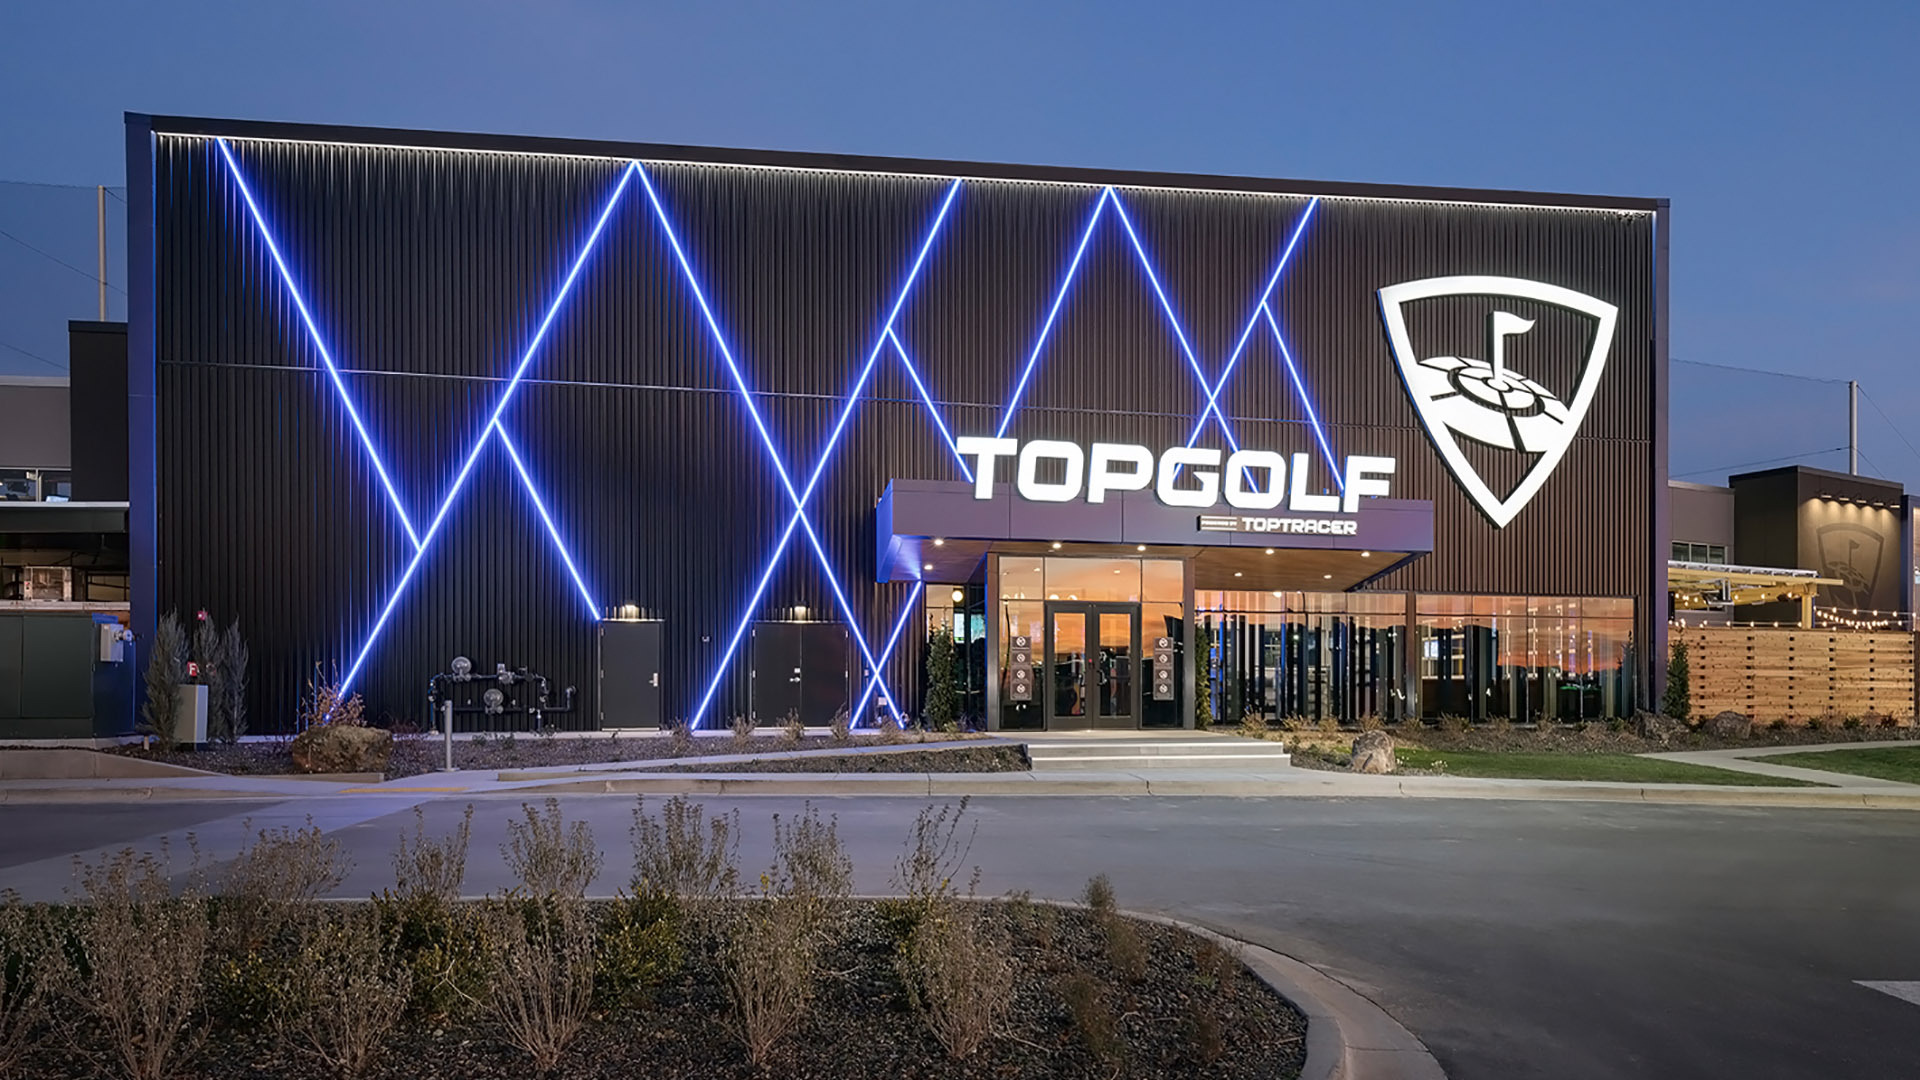 Exterior of Topgolf Wichita